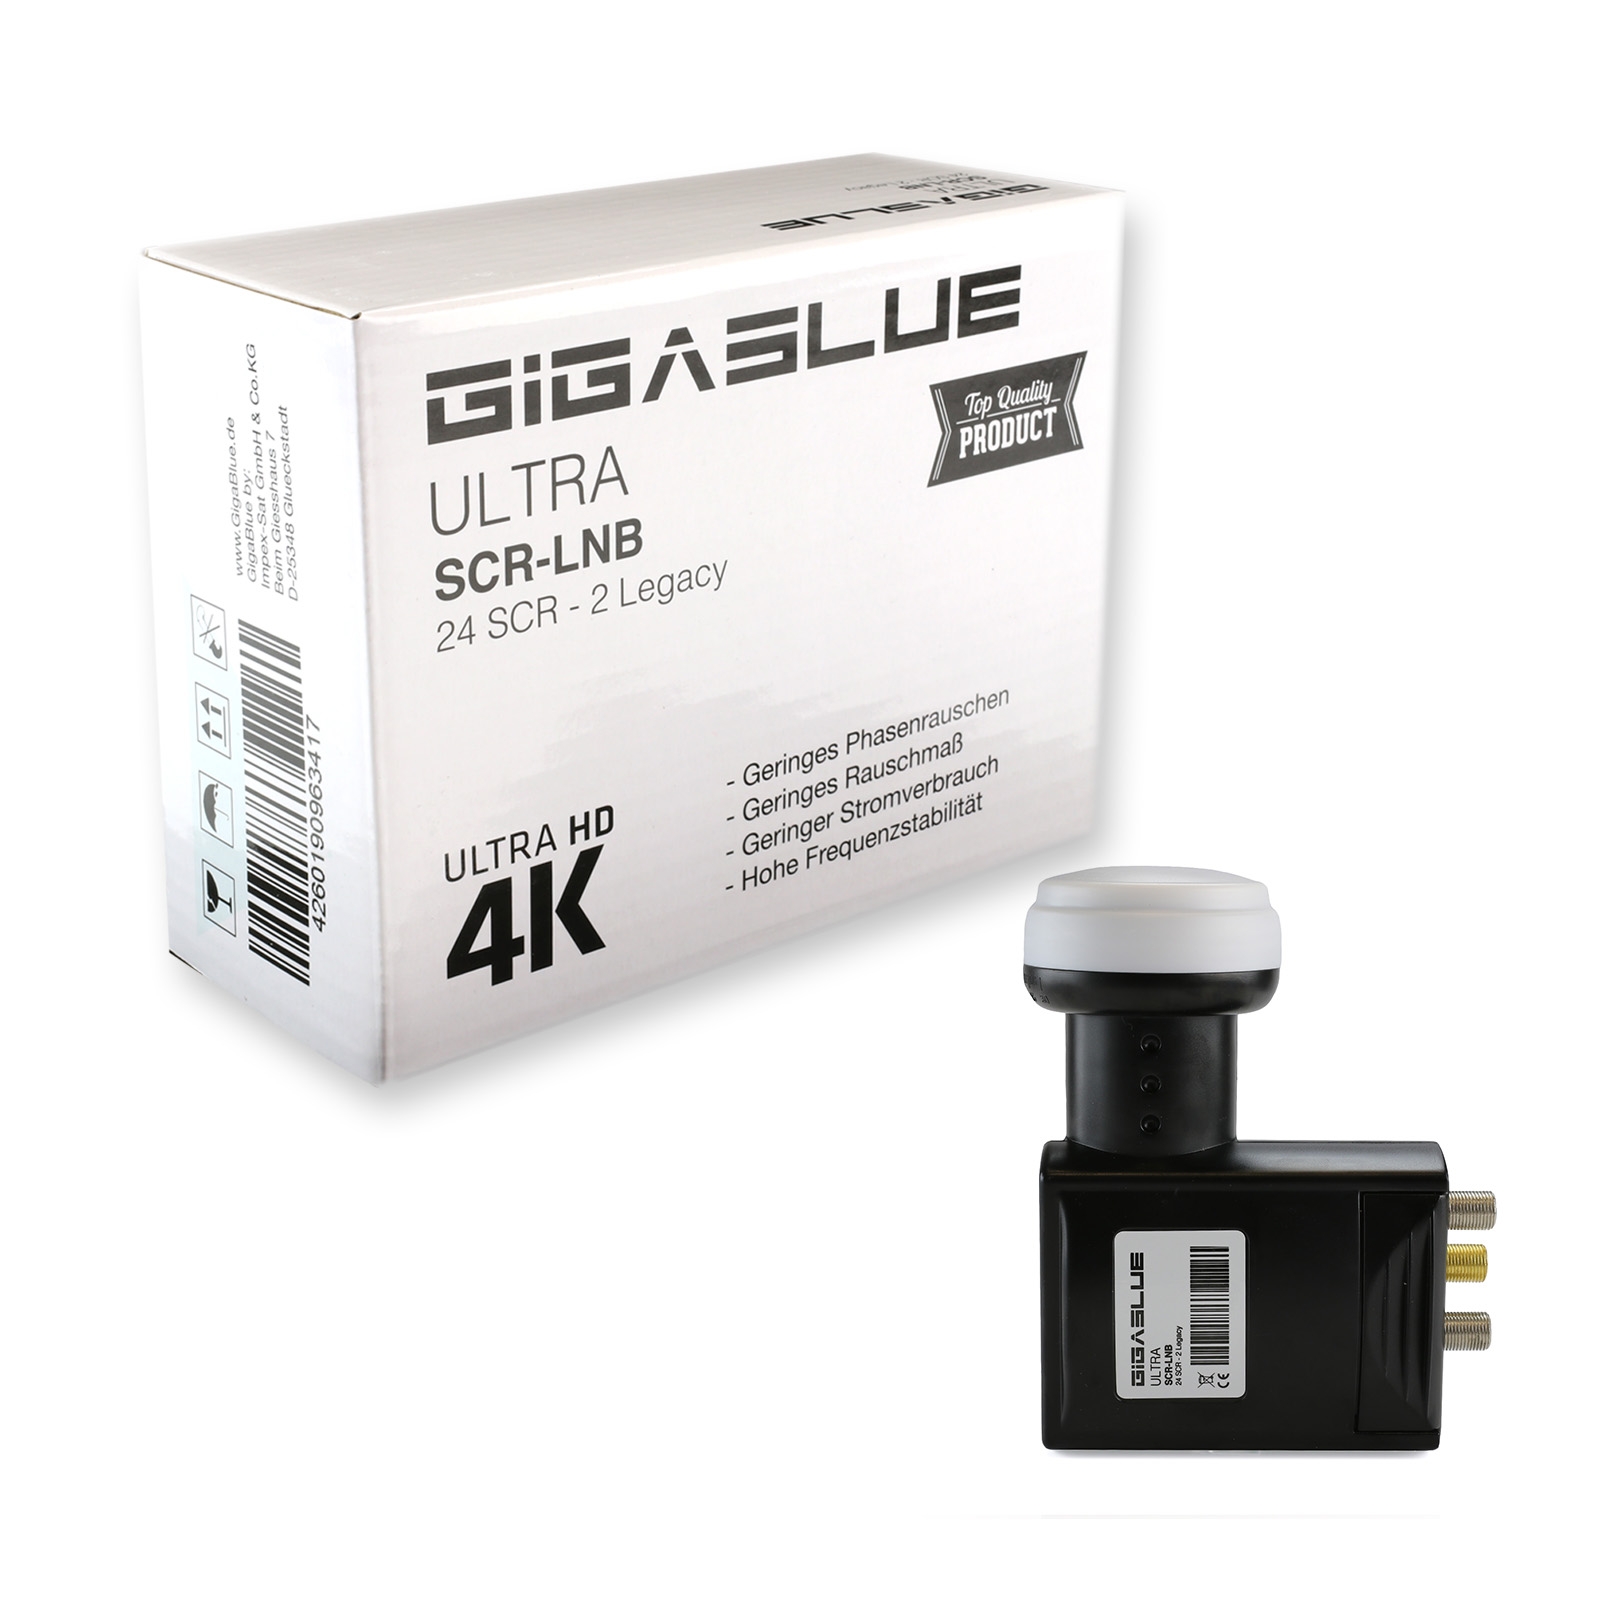 Gigablue Ultra SCR-LNB 24 SCR - 2 Legacy UHD 4K Unicable LNB 0.2dB